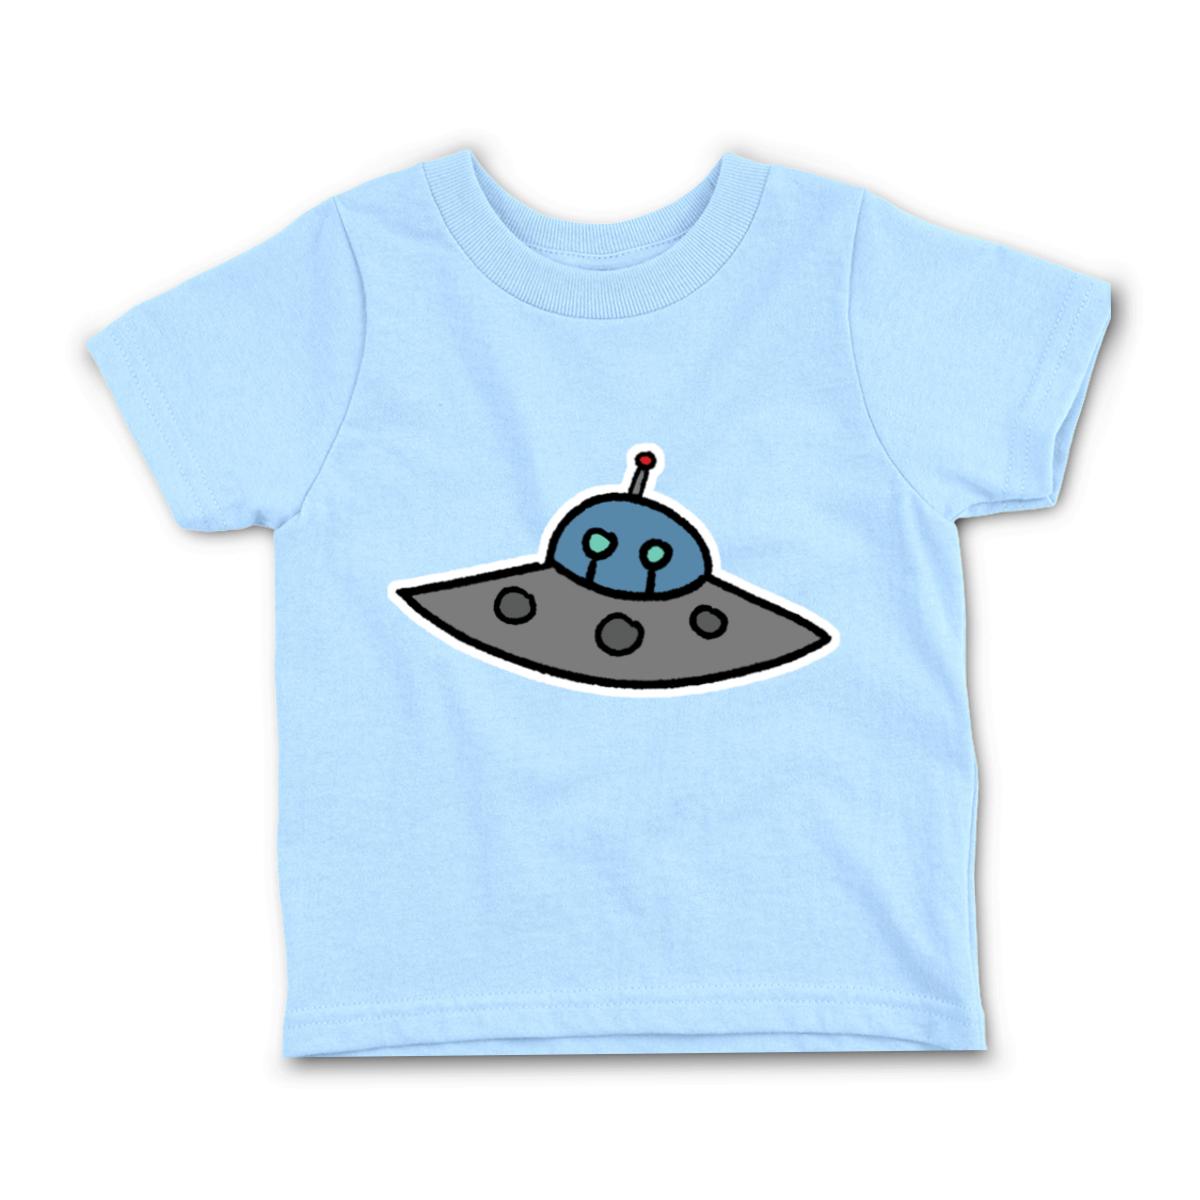 Flying Saucer Toddler Tee 2T light-blue